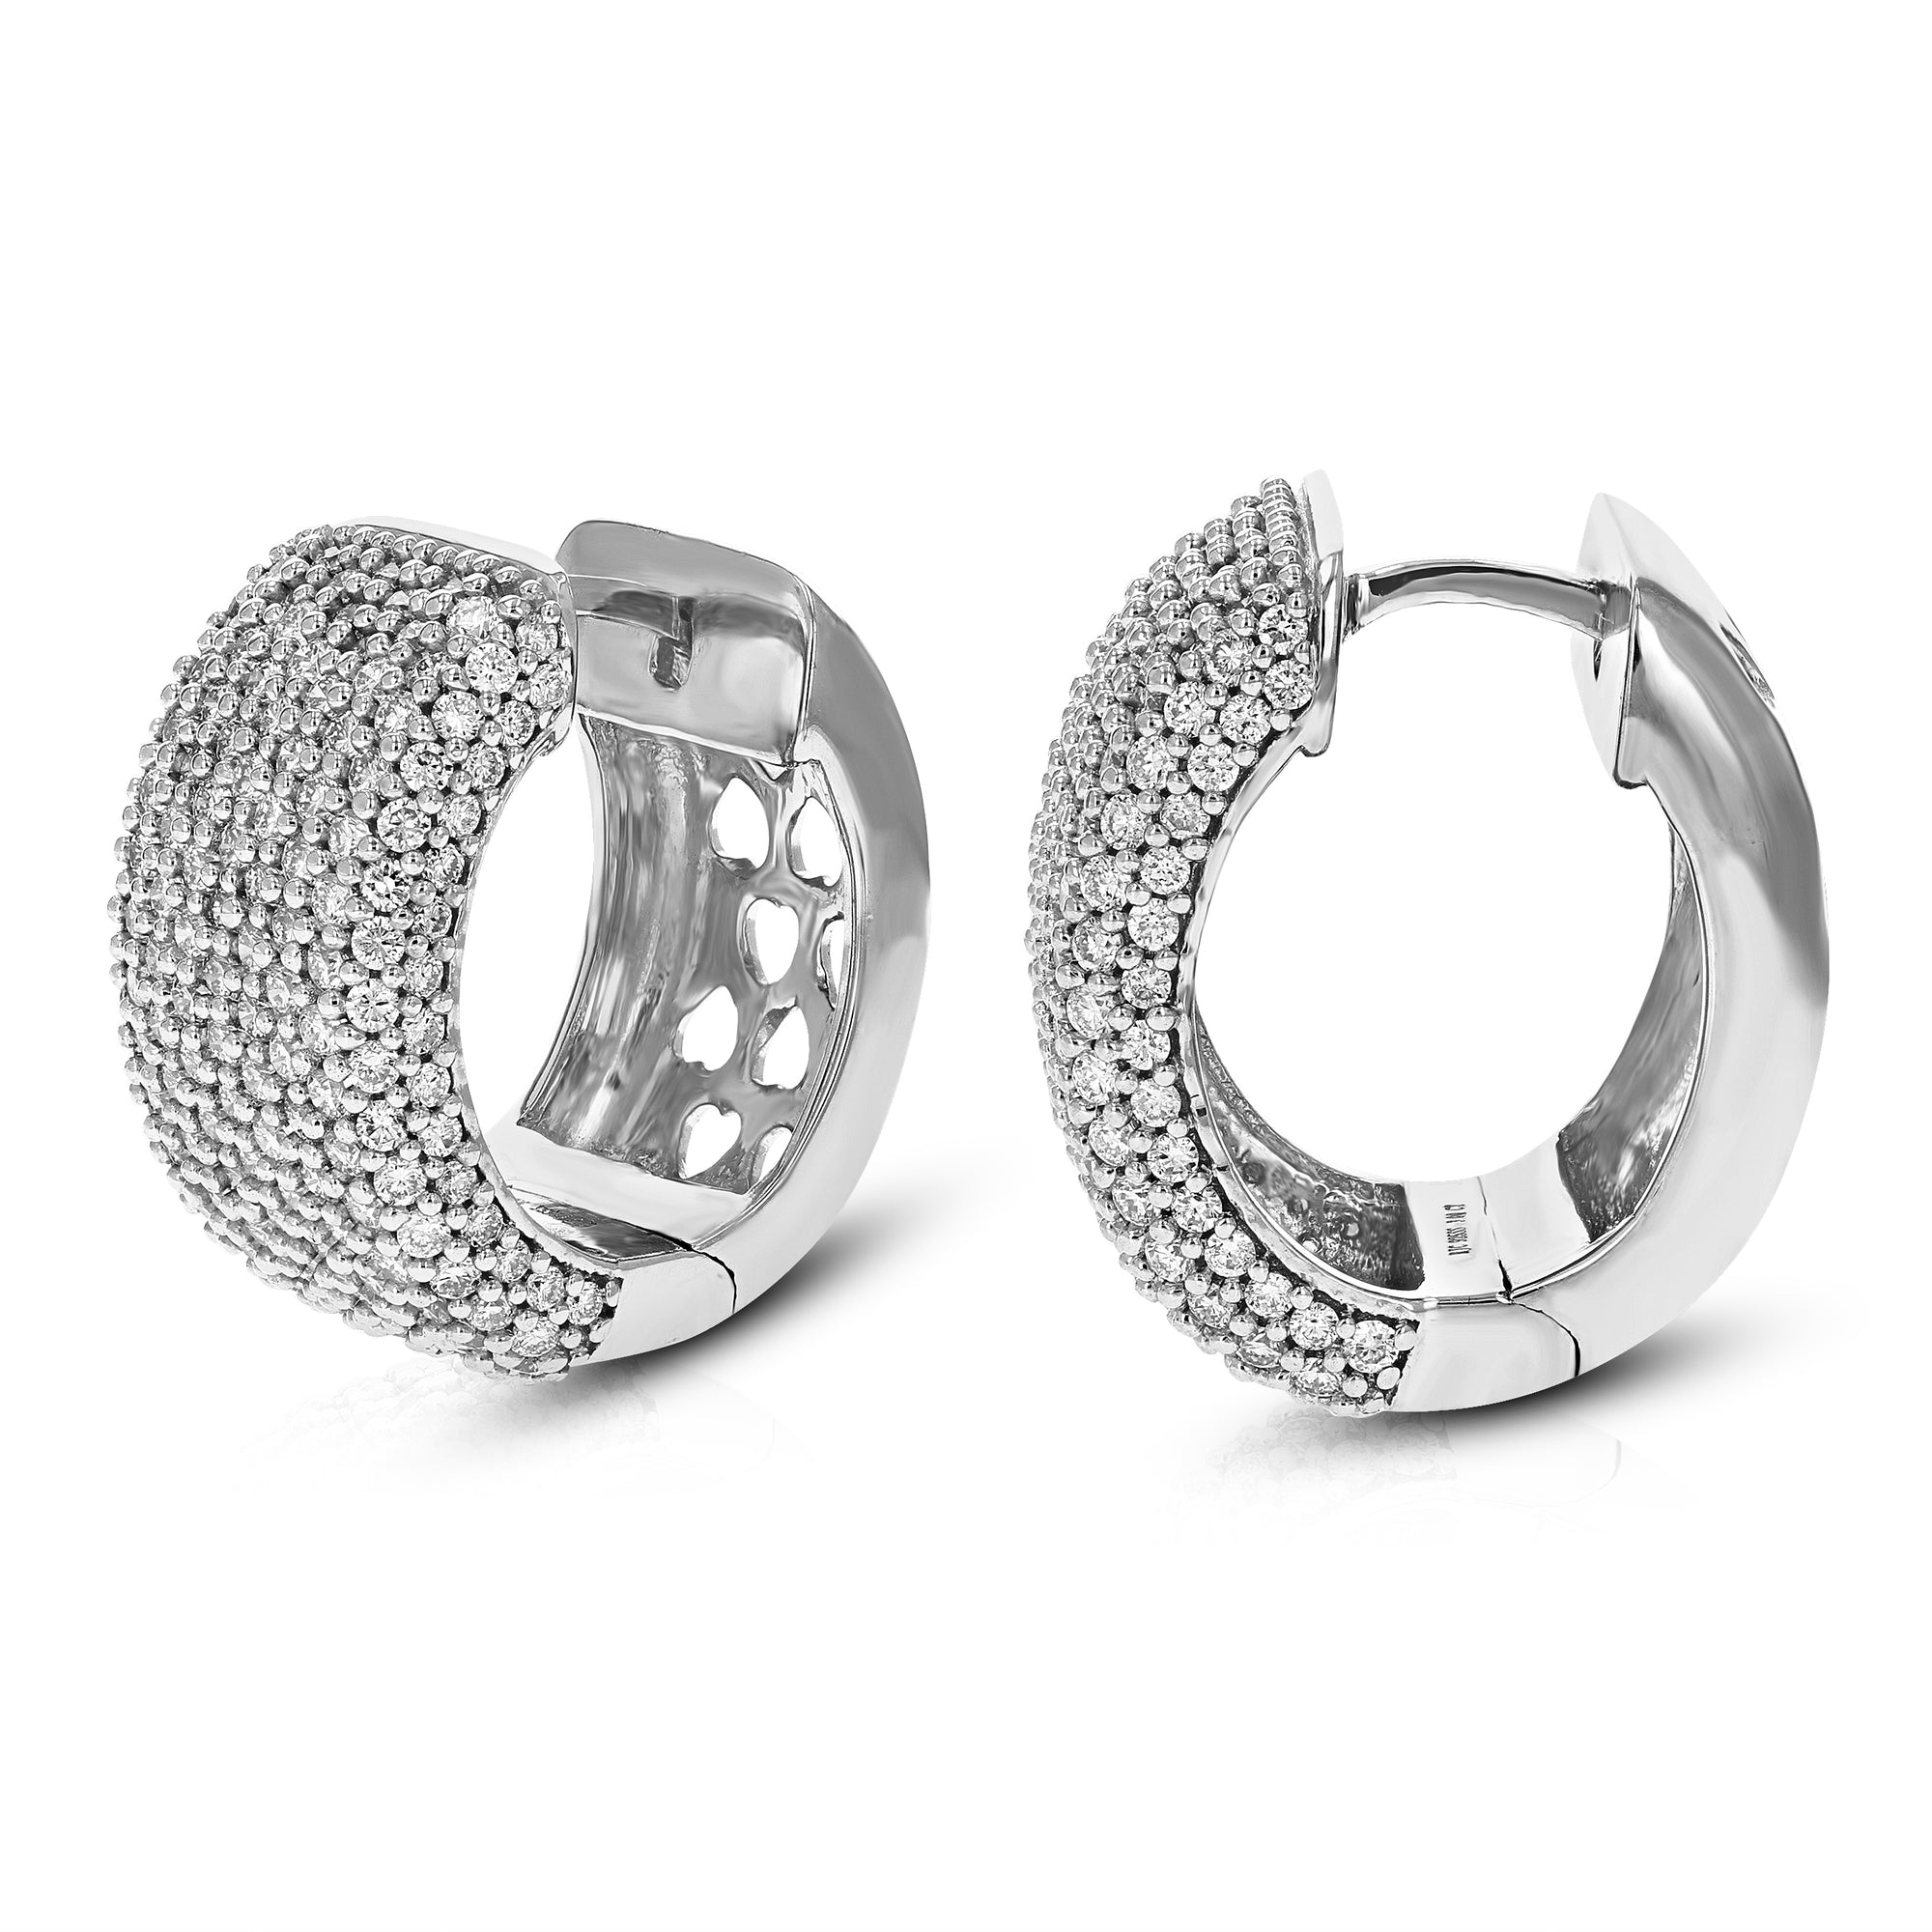 3 cttw Diamond Hoop Earrings for Women, Round Lab Grown Diamond Earrings in .925 Sterling Silver, Prong Setting, 3/4 Inch